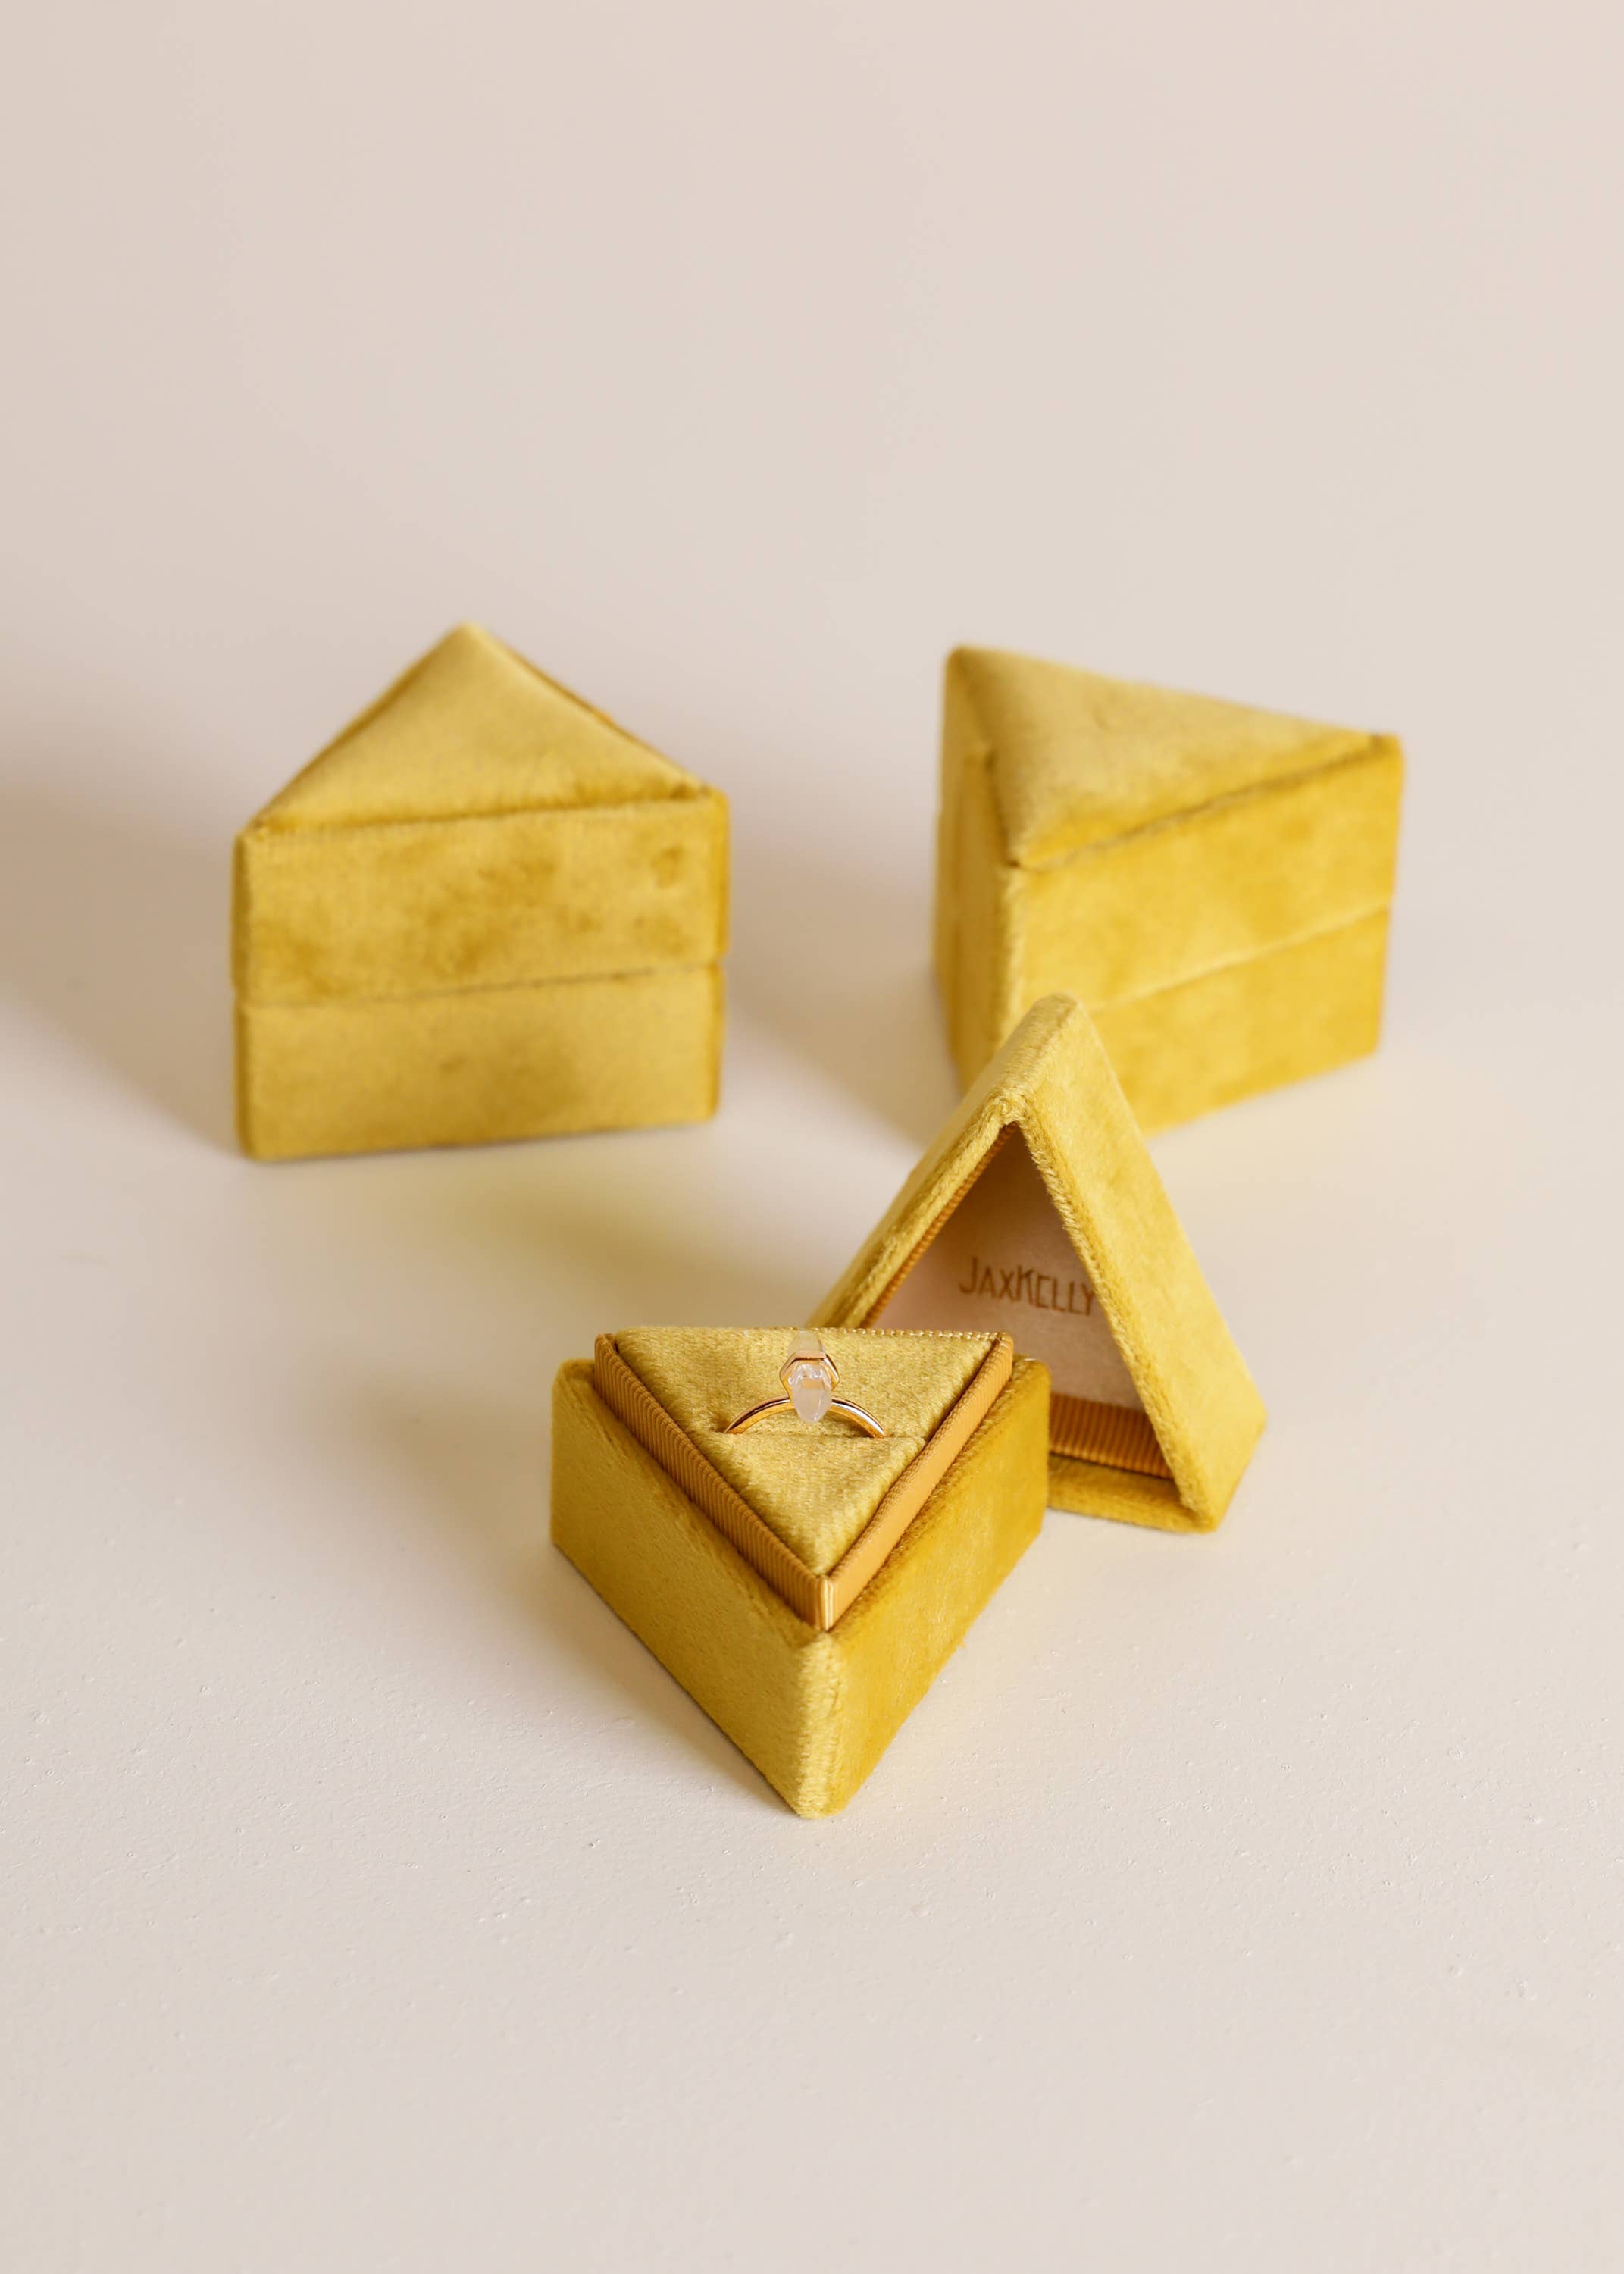 JaxKelly - Velvet Jewelry Box - Triangle - Chartreuse